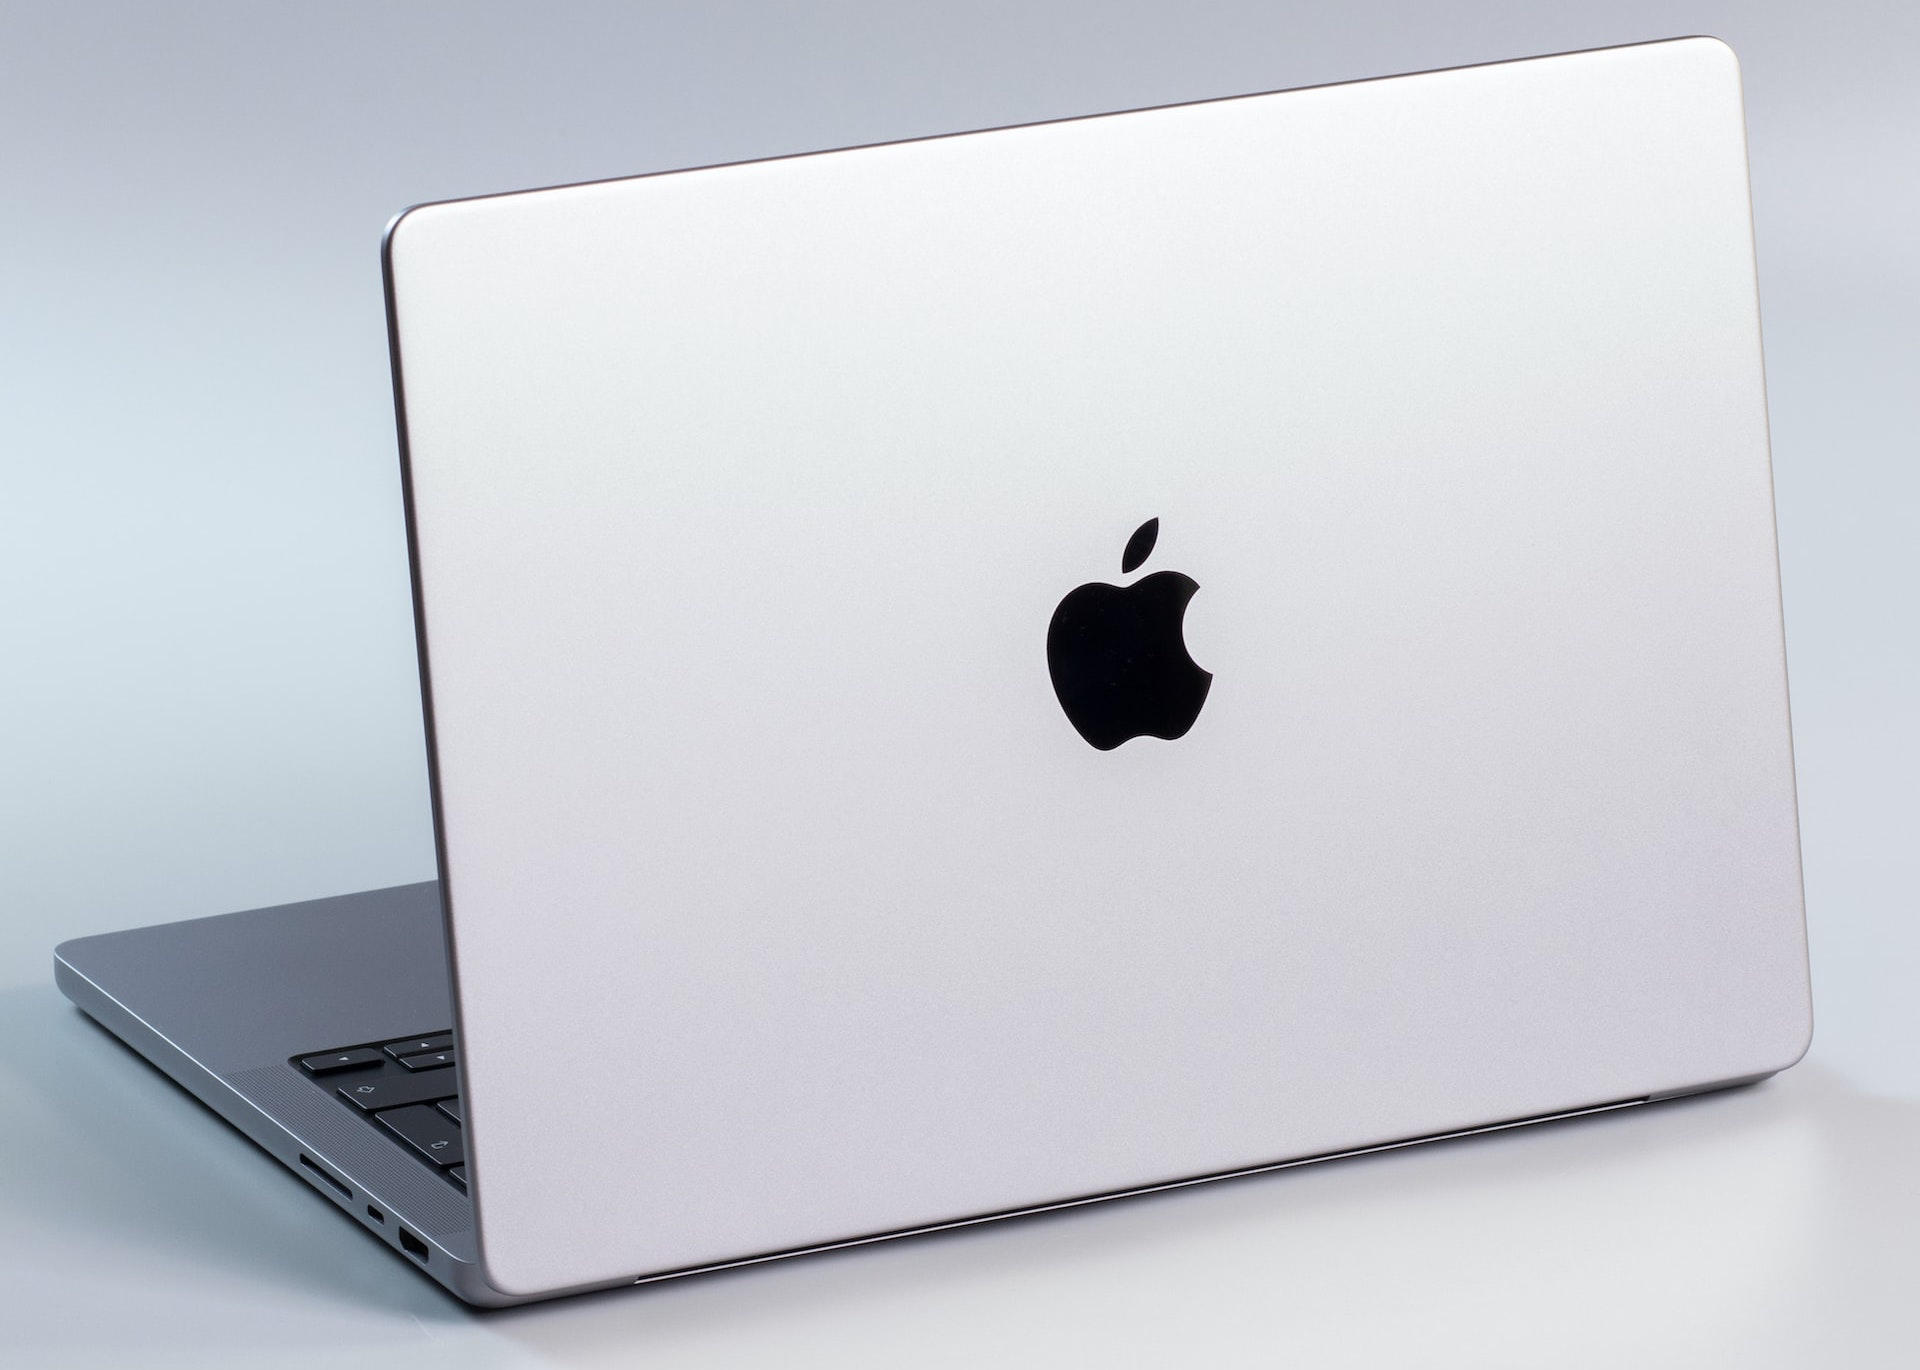 M2 MacBook Air and MacBook Pro comparison